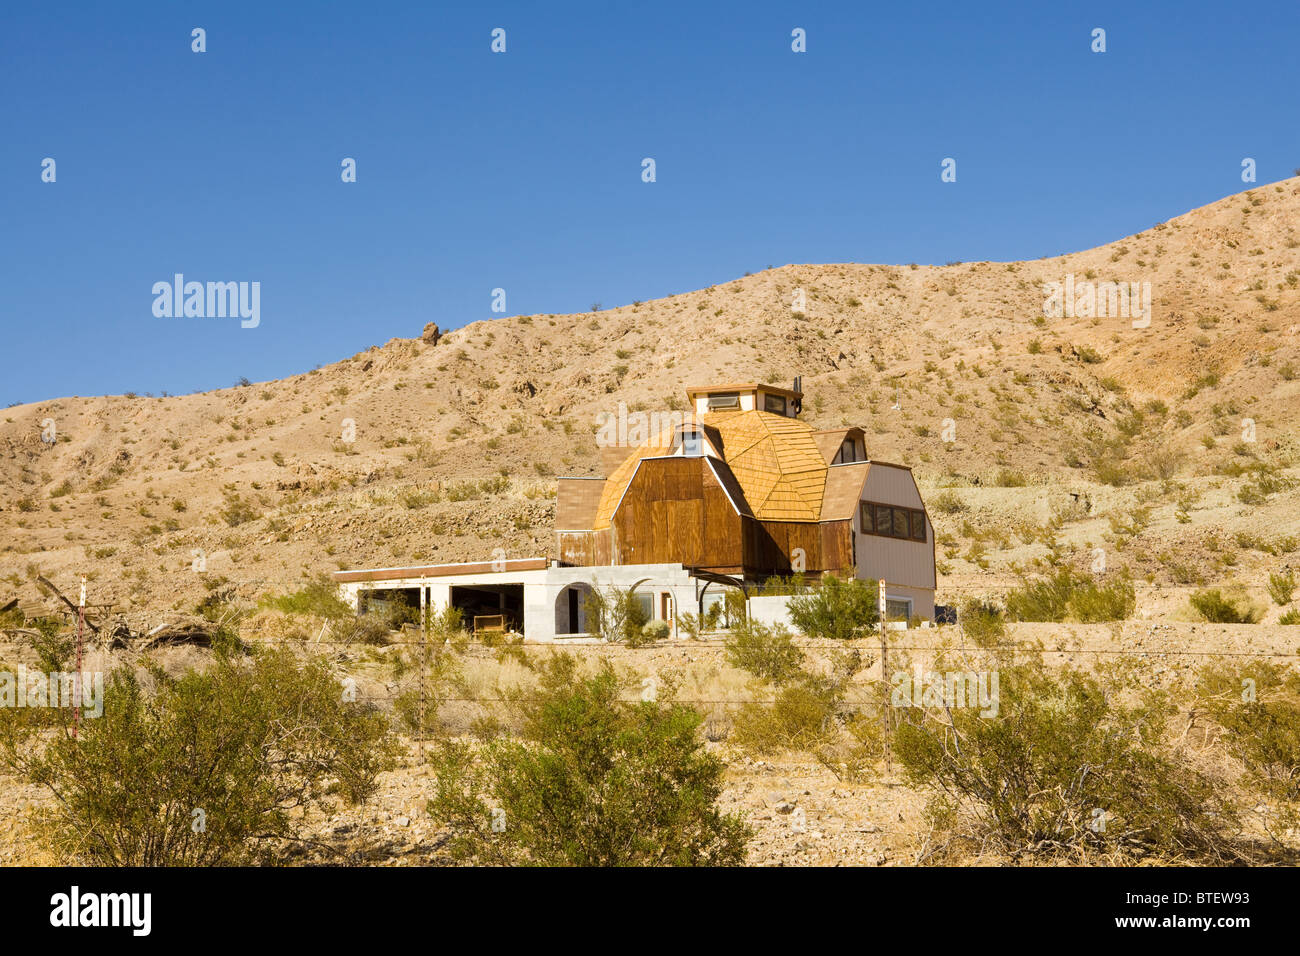 North American desert home with geodesic design - Mojave Desert, USA Stock Photo